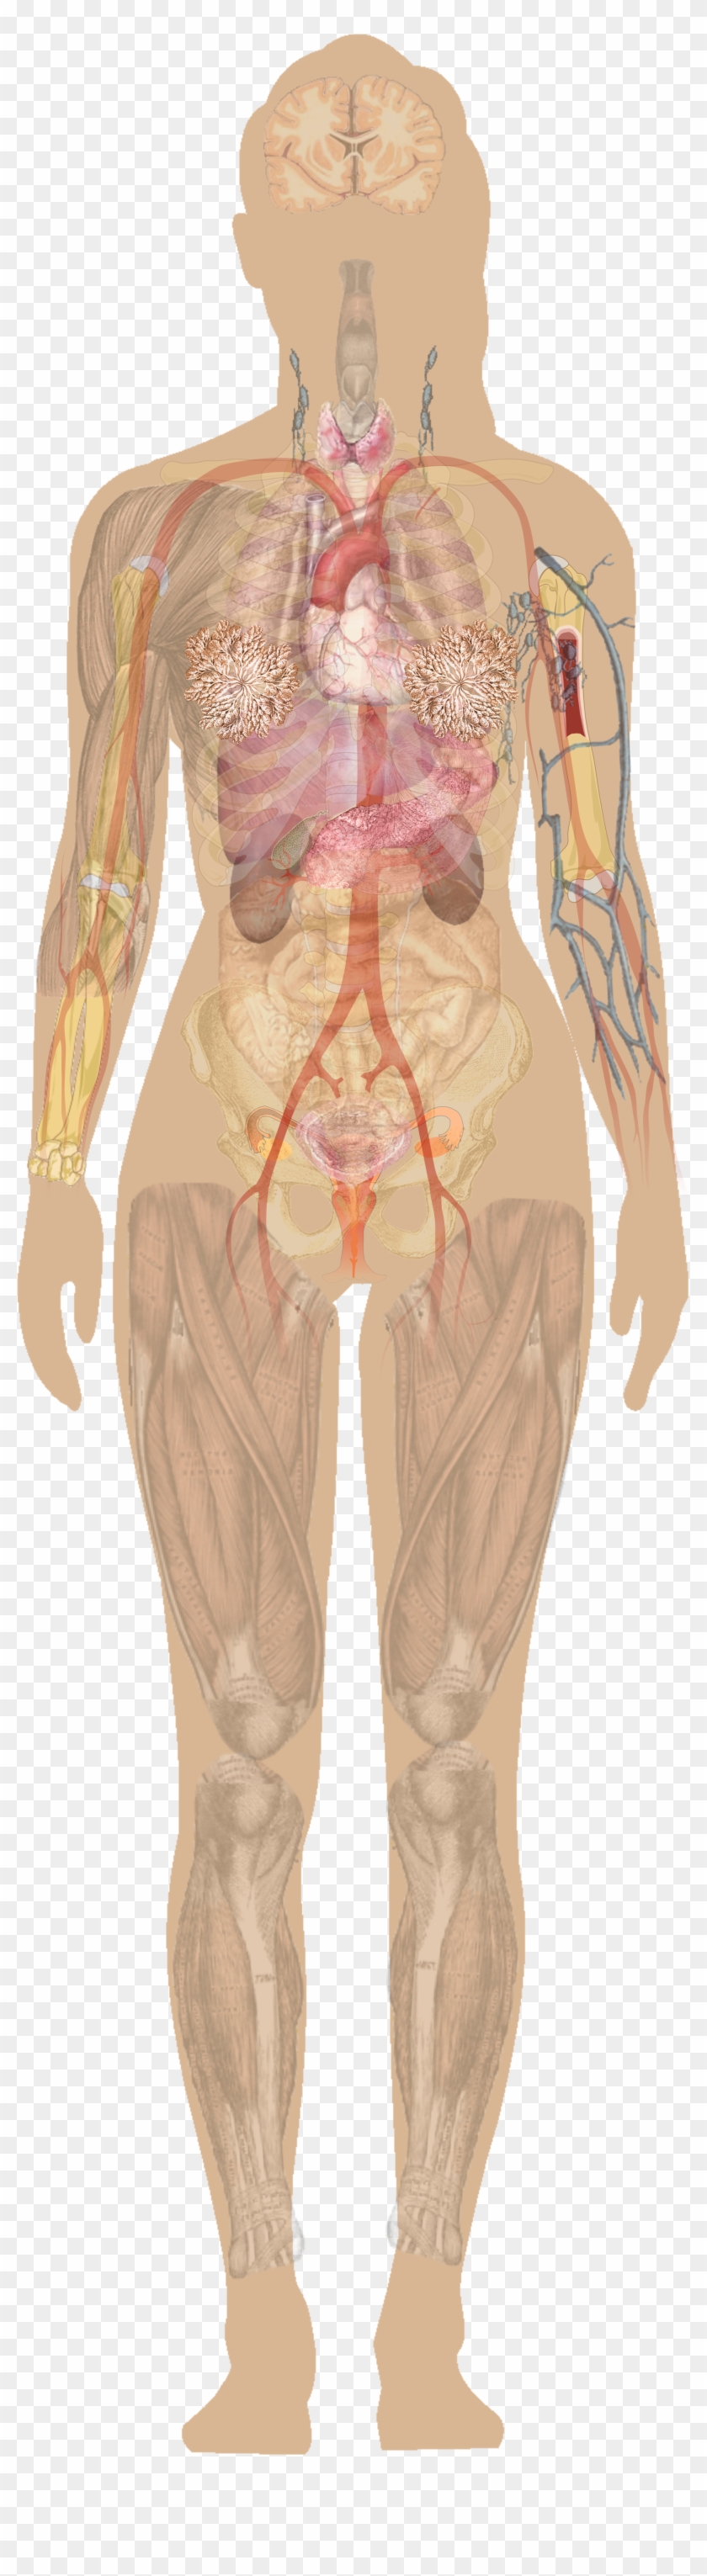 Female Chest Anatomy Diagram Female Human Anatomy - Human Anatomy Organs No Labels Clipart #4109042